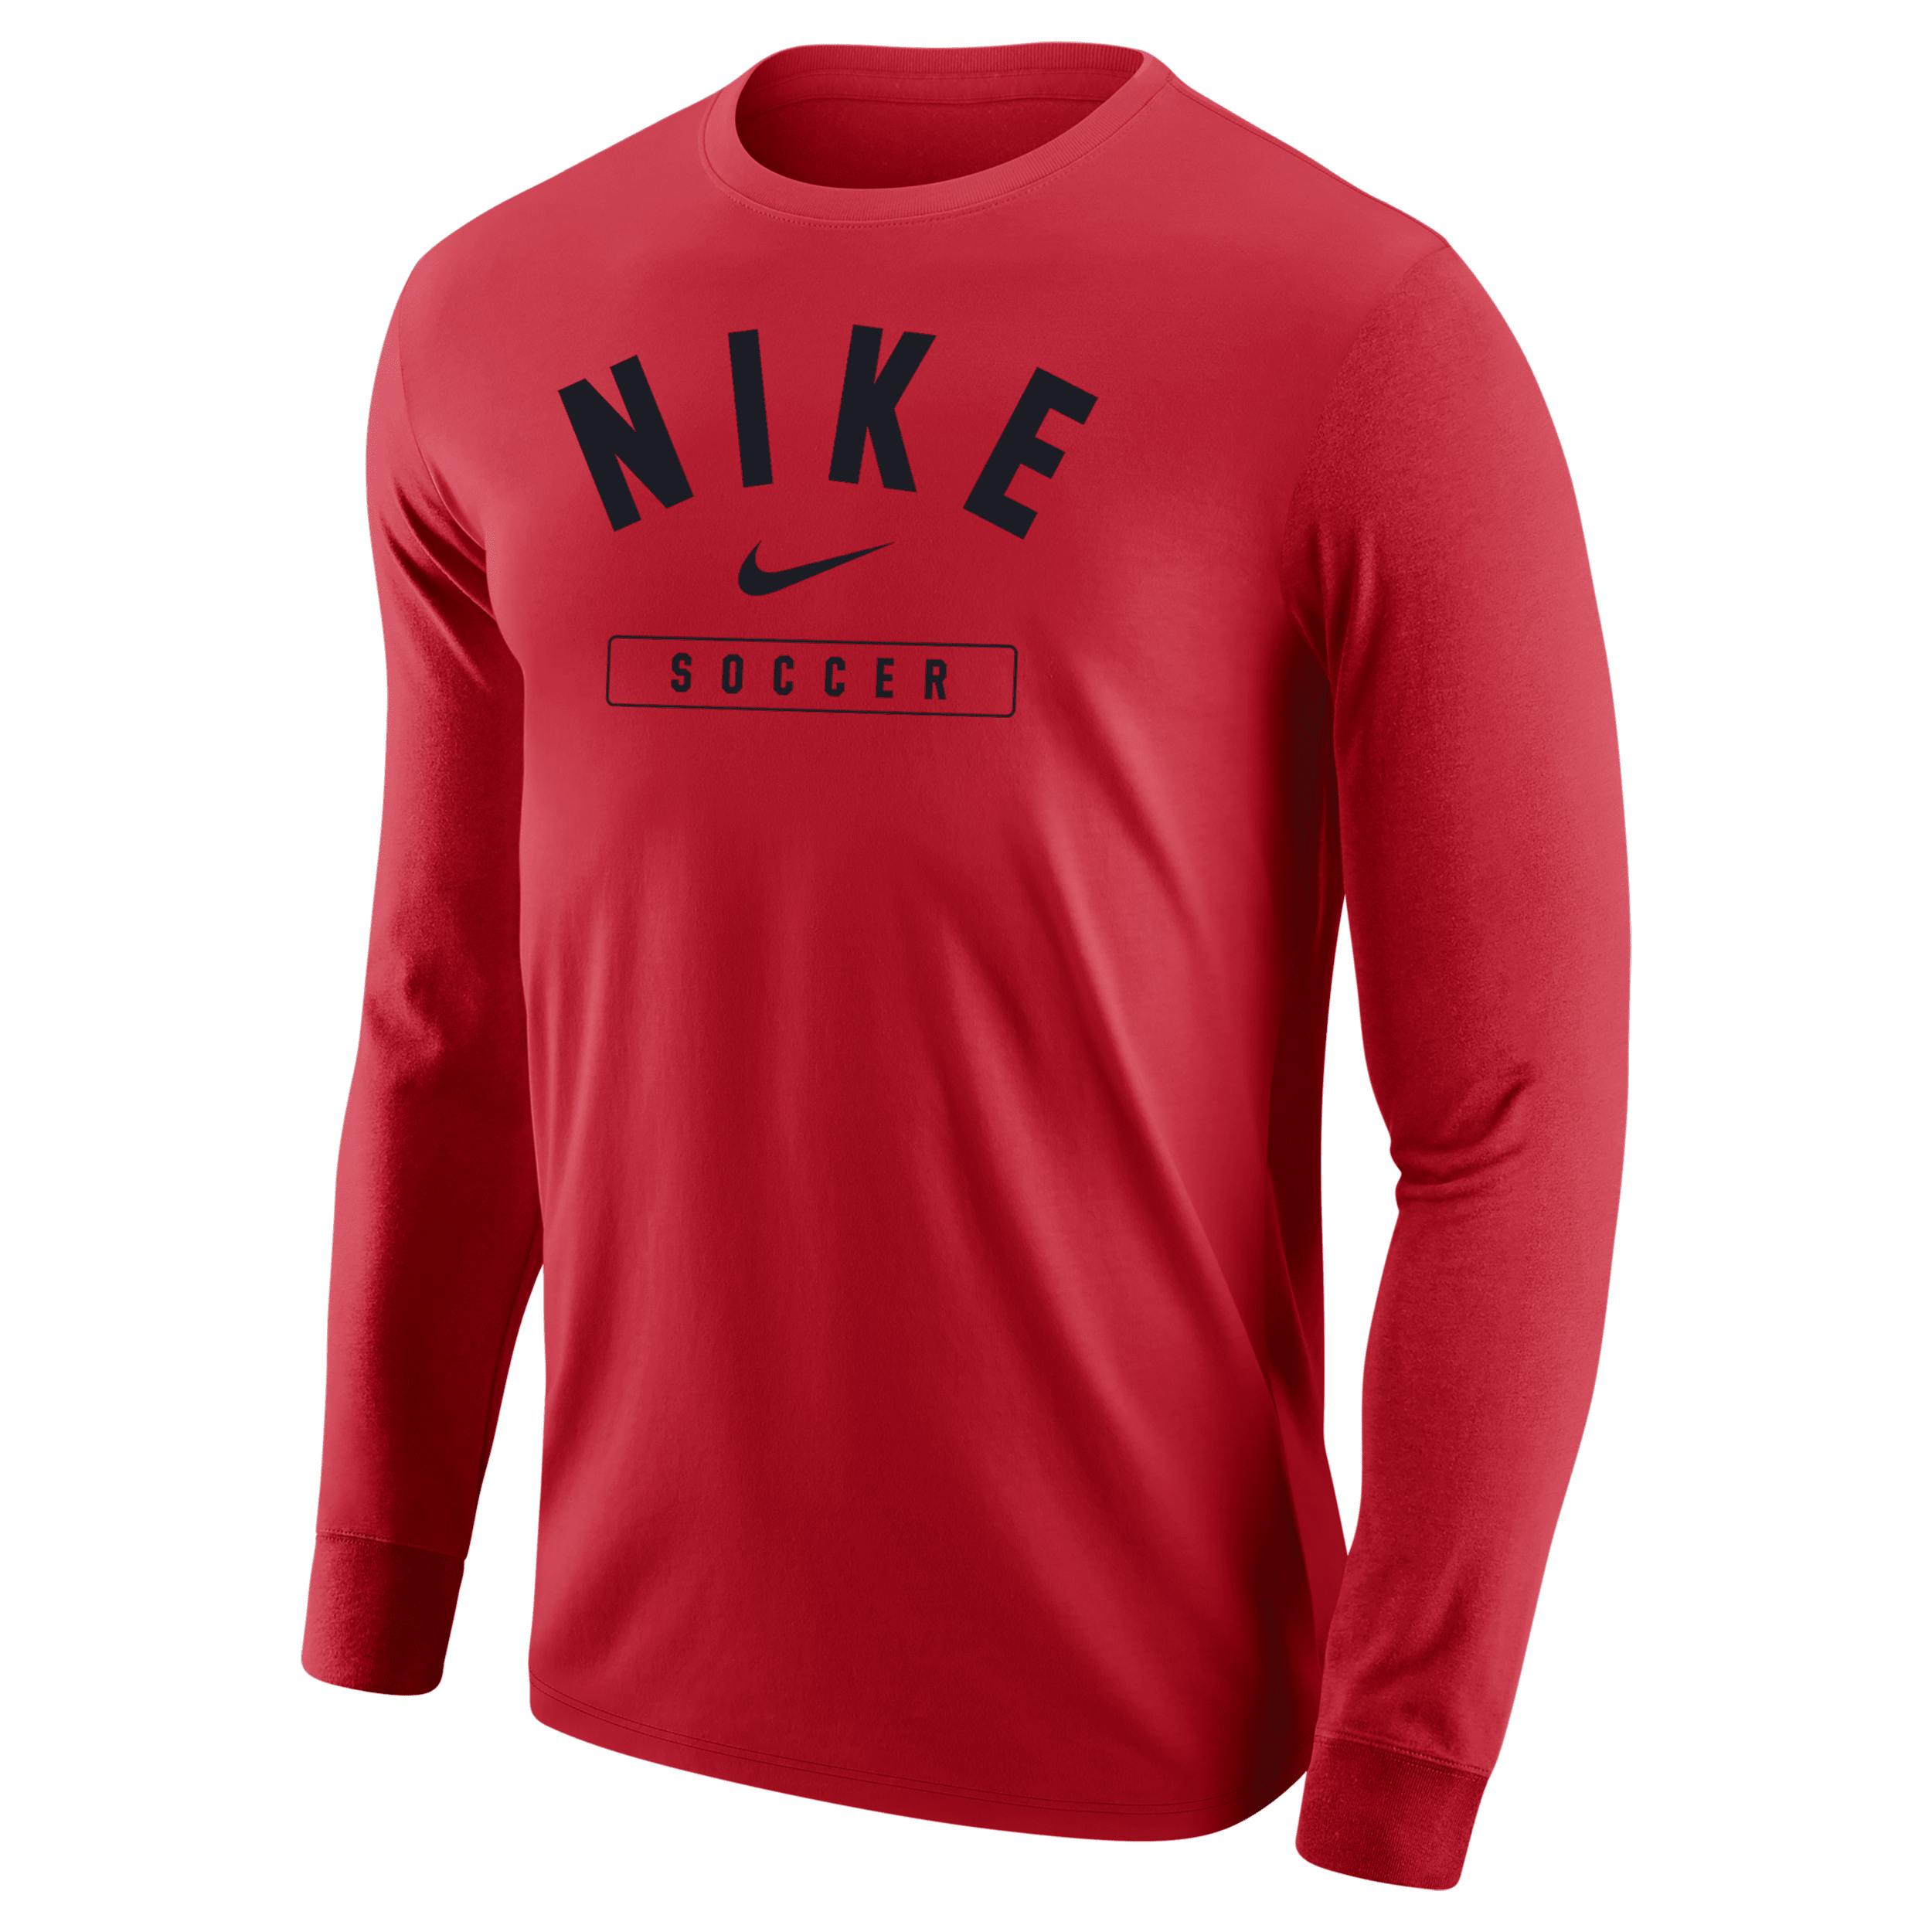 Nike Men's Swoosh Soccer Long-sleeve T-shirt In Red